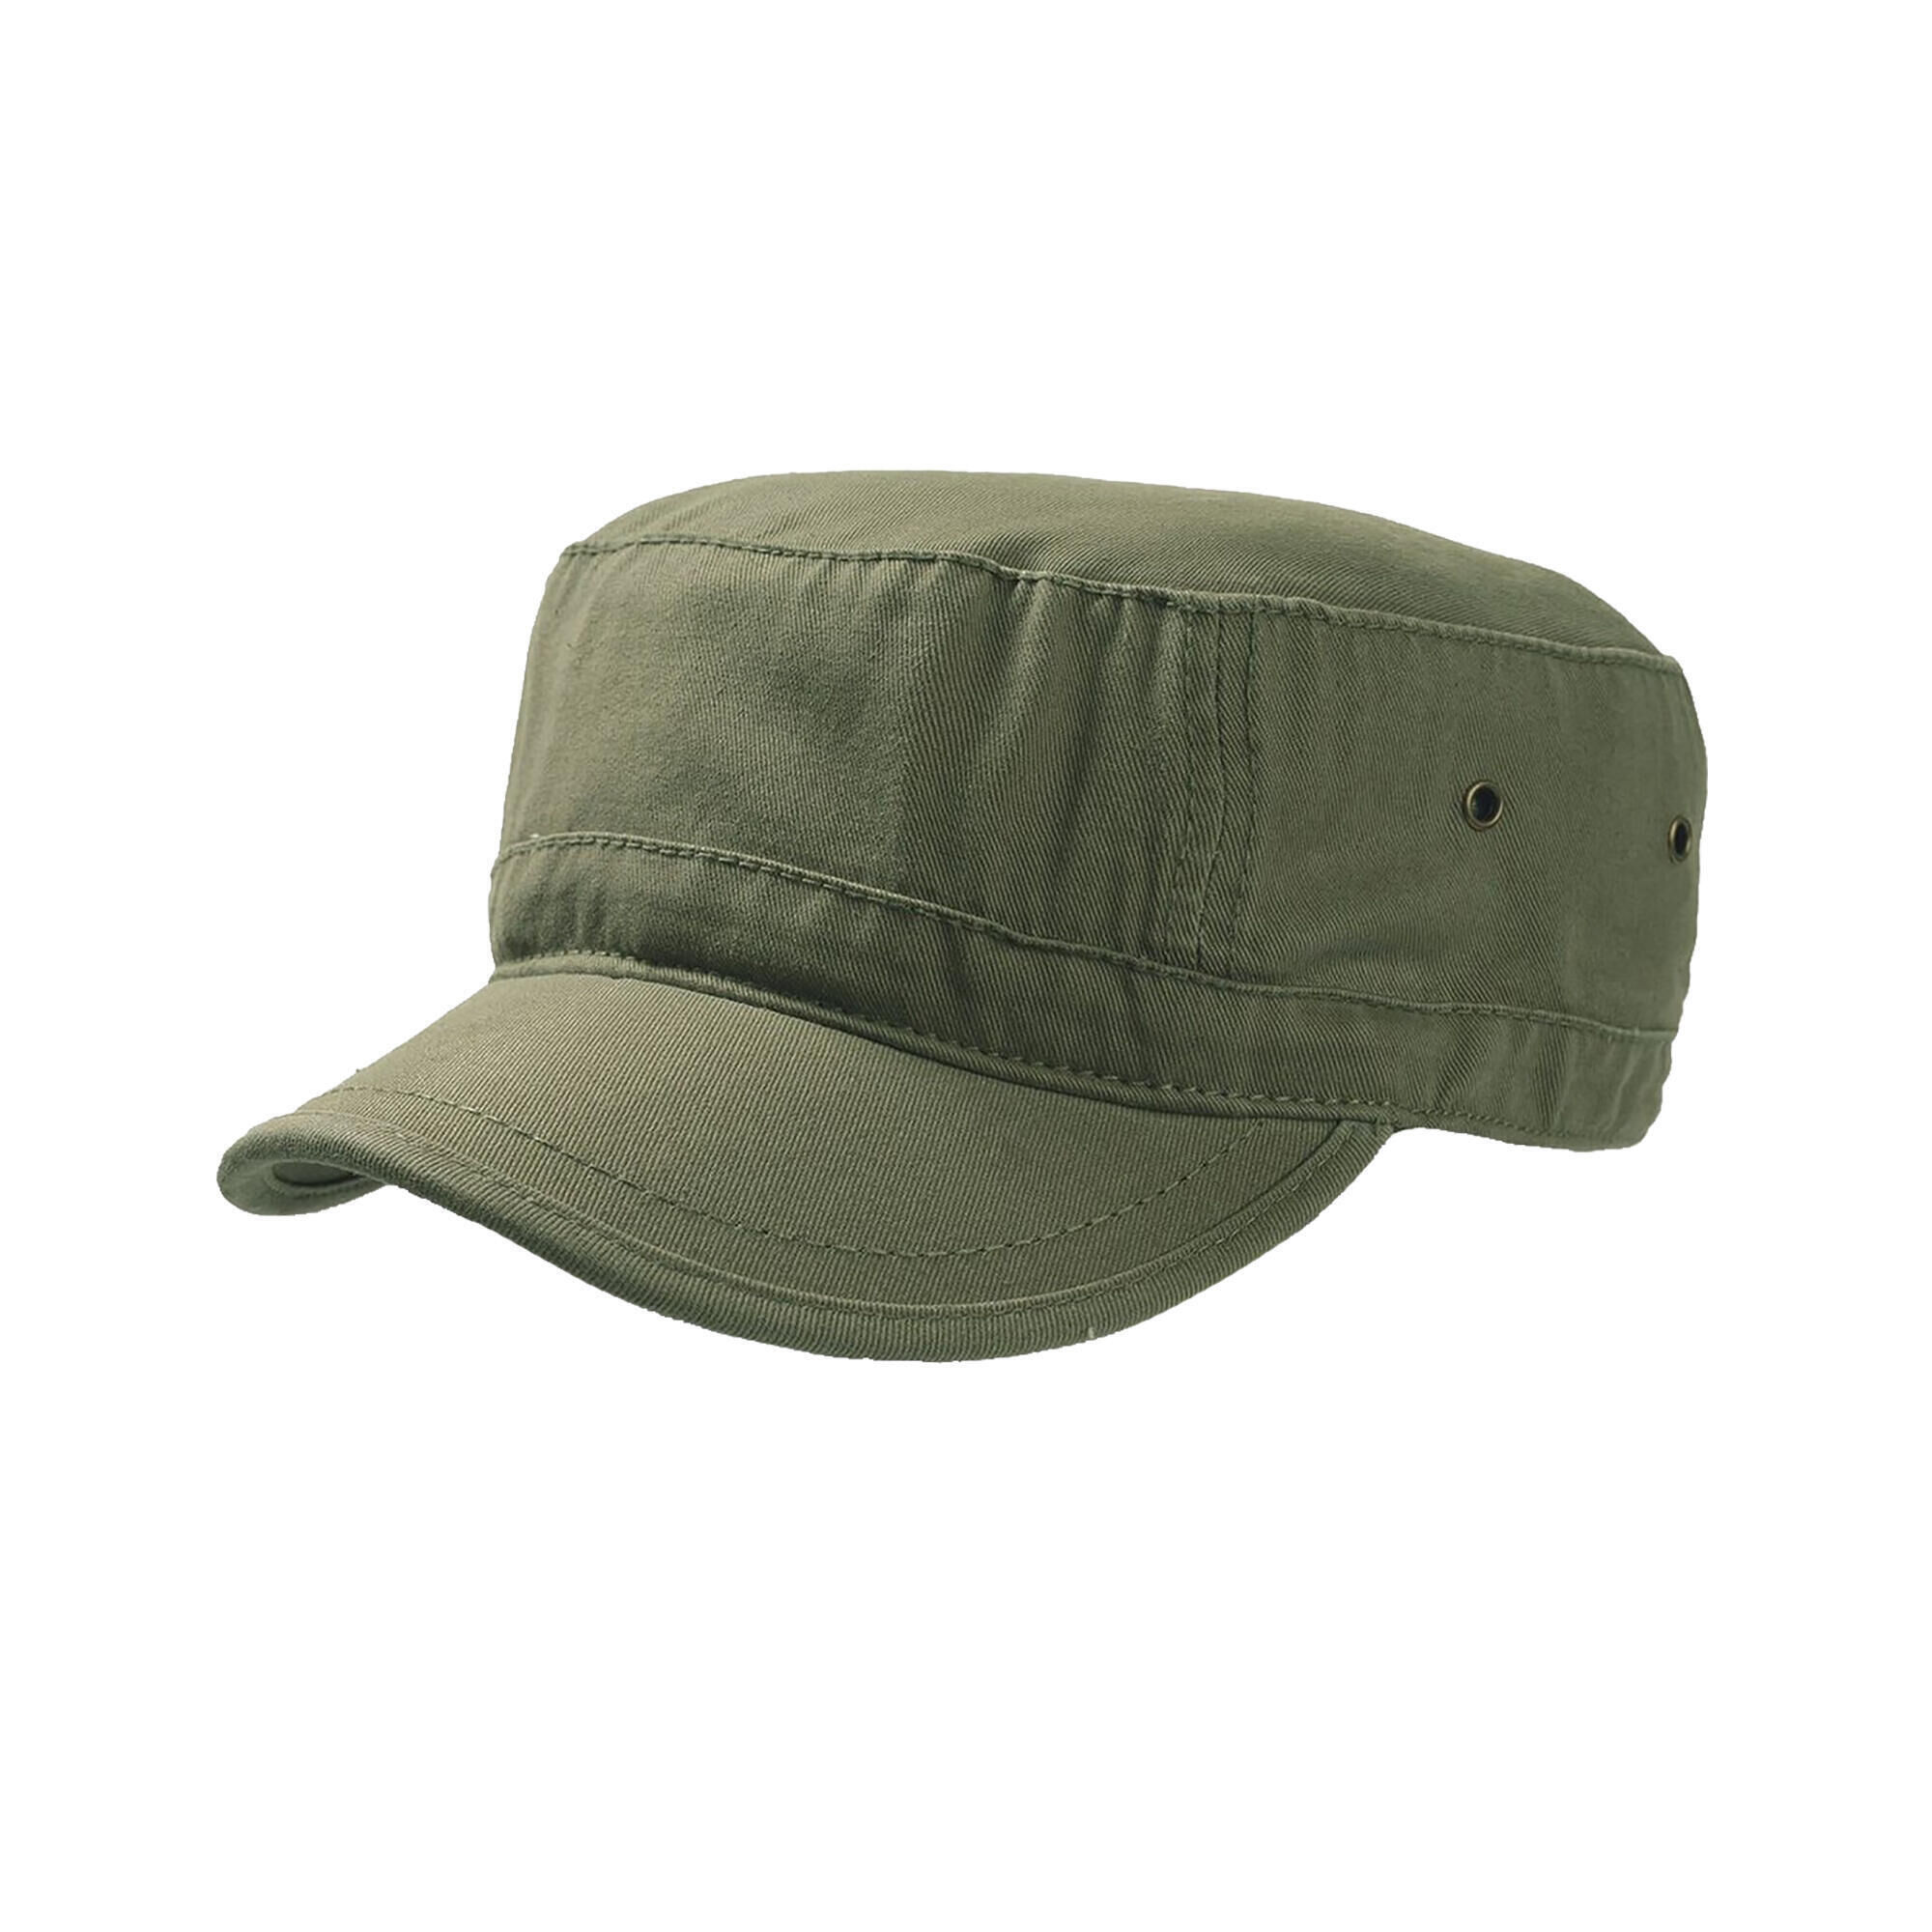 ATLANTIS Chino Cotton Urban Military Cap (Pack of 2) (Olive)